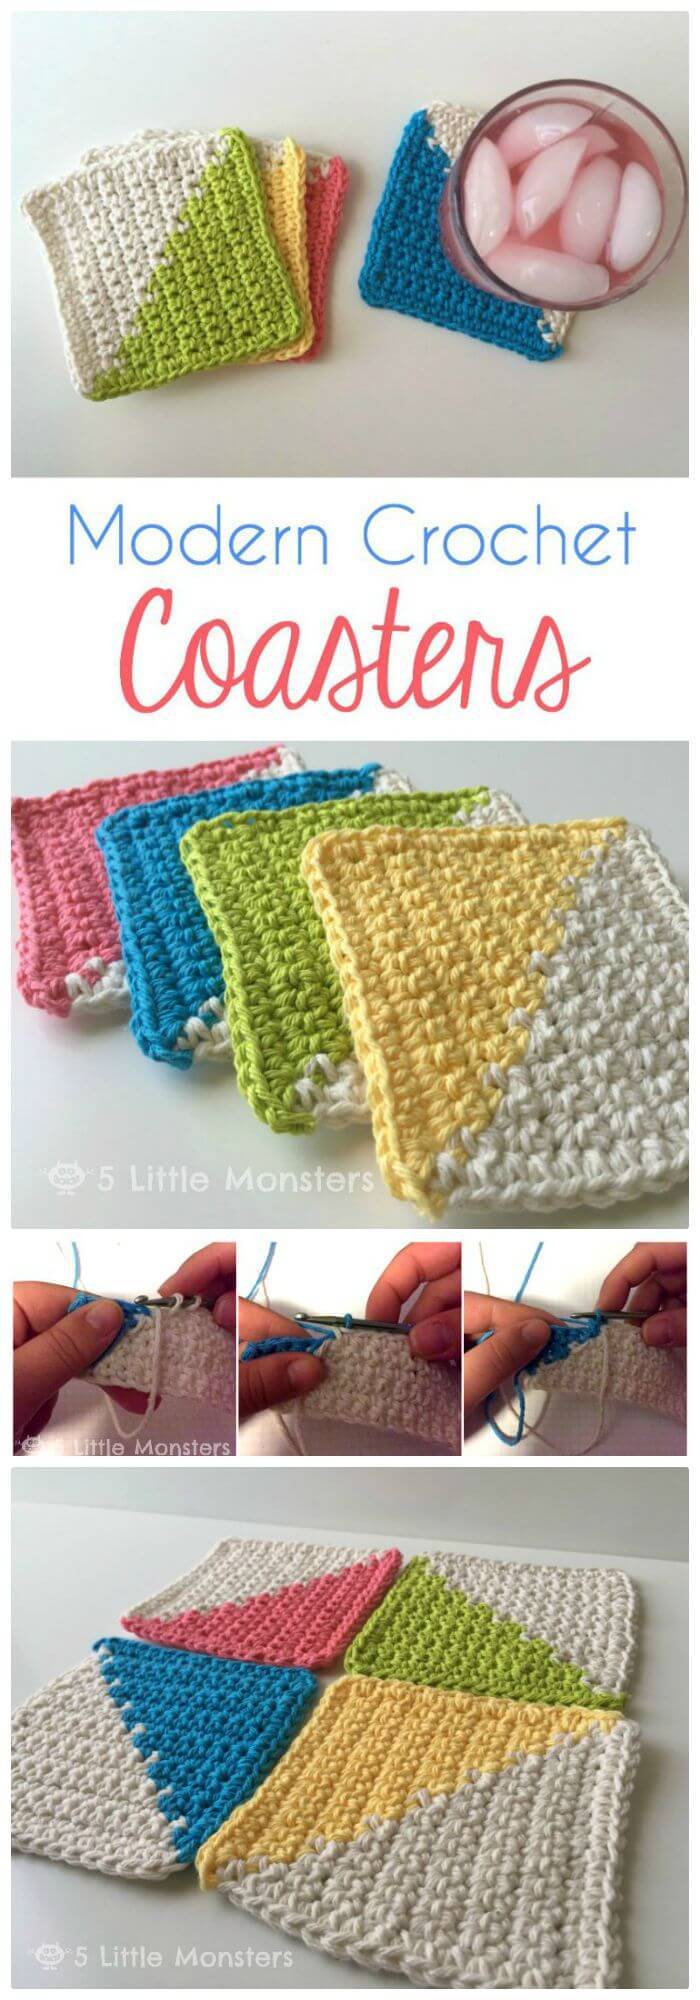 DIY Modern Crochet Coasters-Free Pattern, Free Crochet Patterns for Modern Coasters!